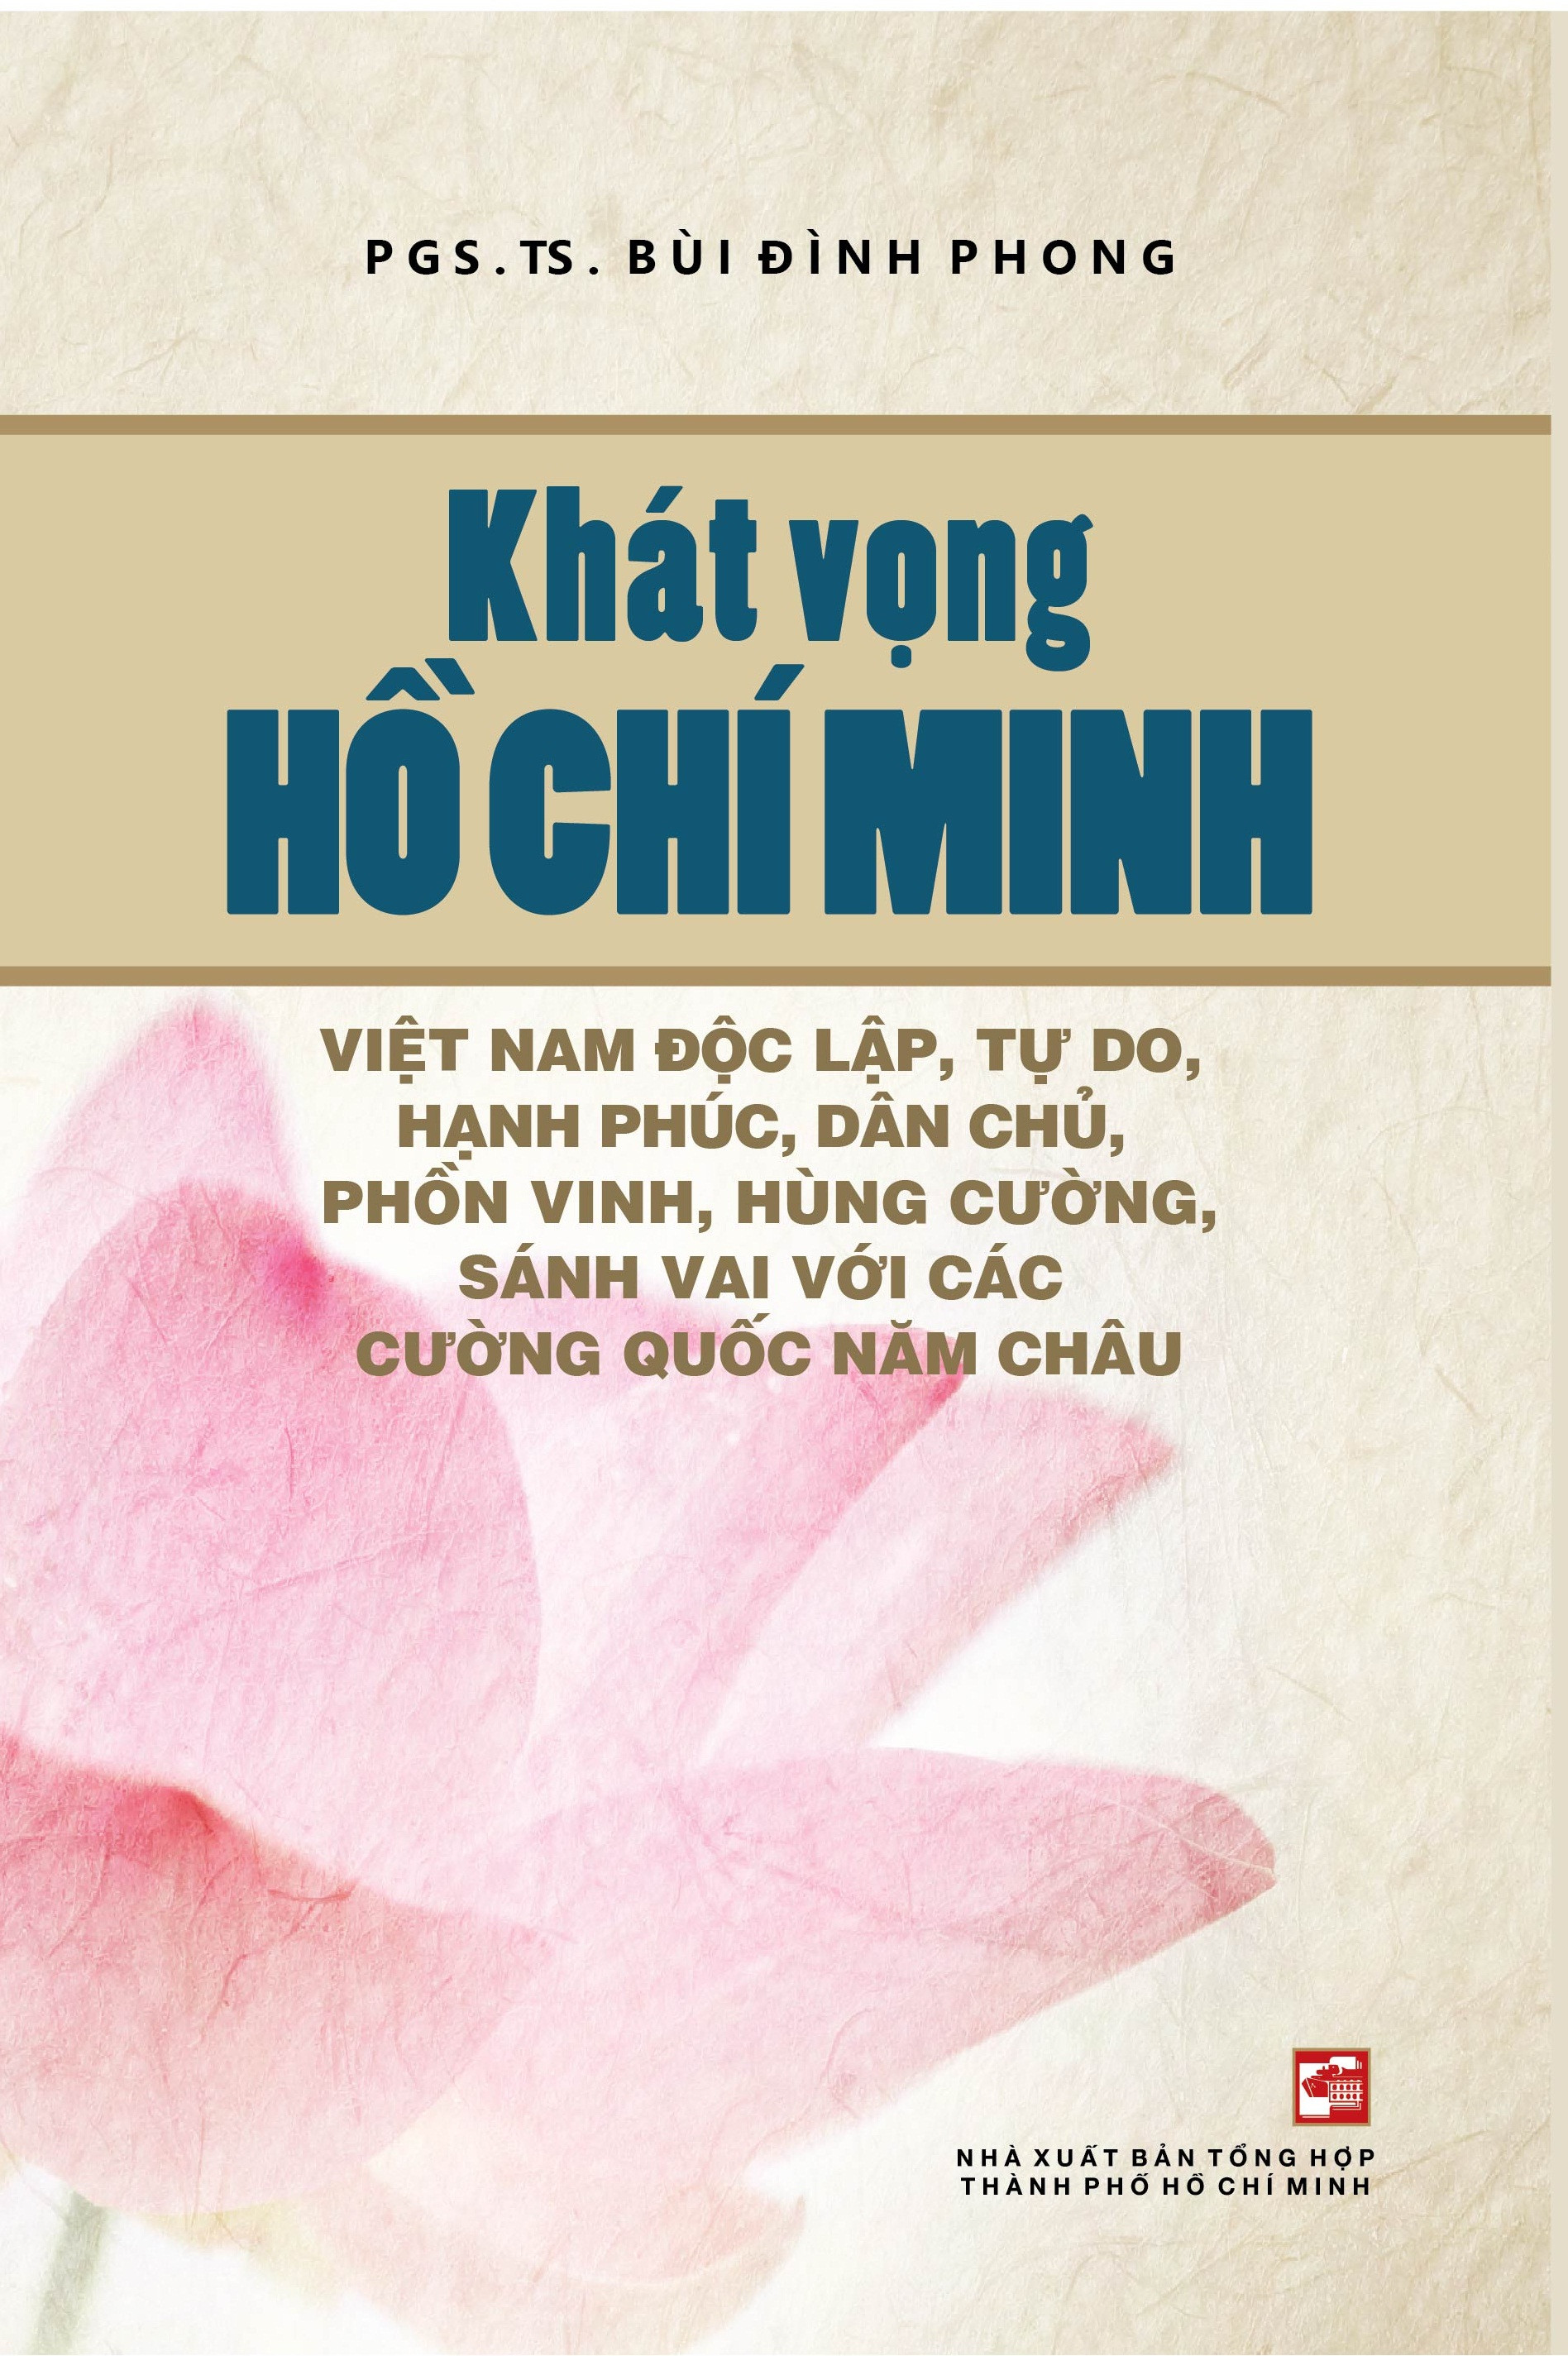 Ra mắt sách về Chủ tịch Hồ Chí Minh - Ảnh 1.